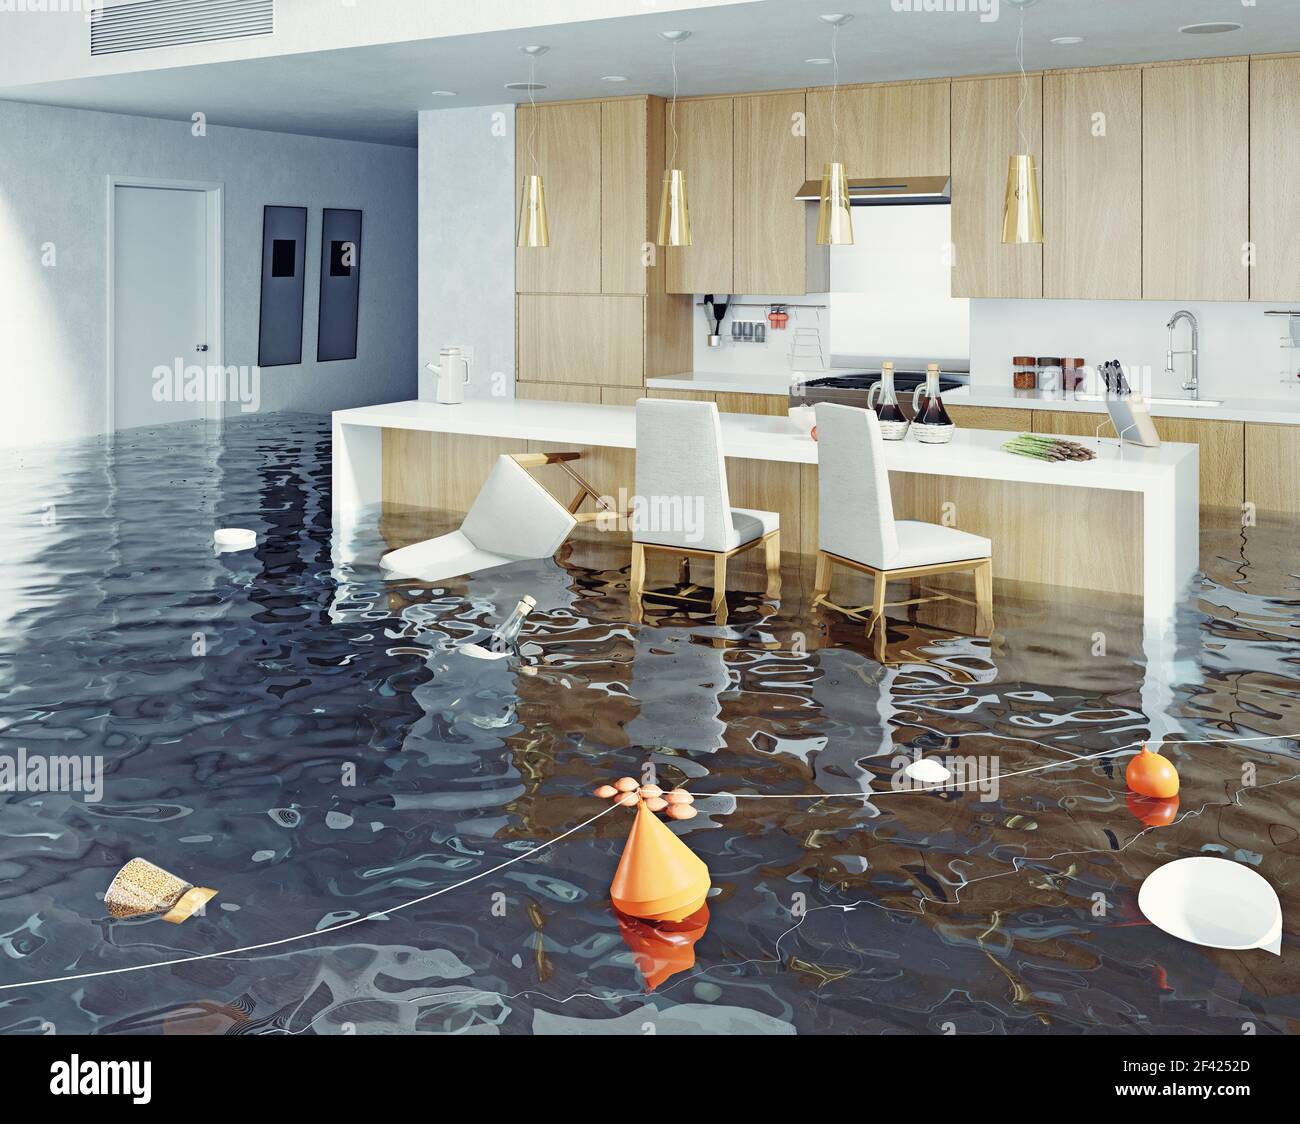 flooding kitchen interior. 3d rendering idea Stock Photo - Alamy